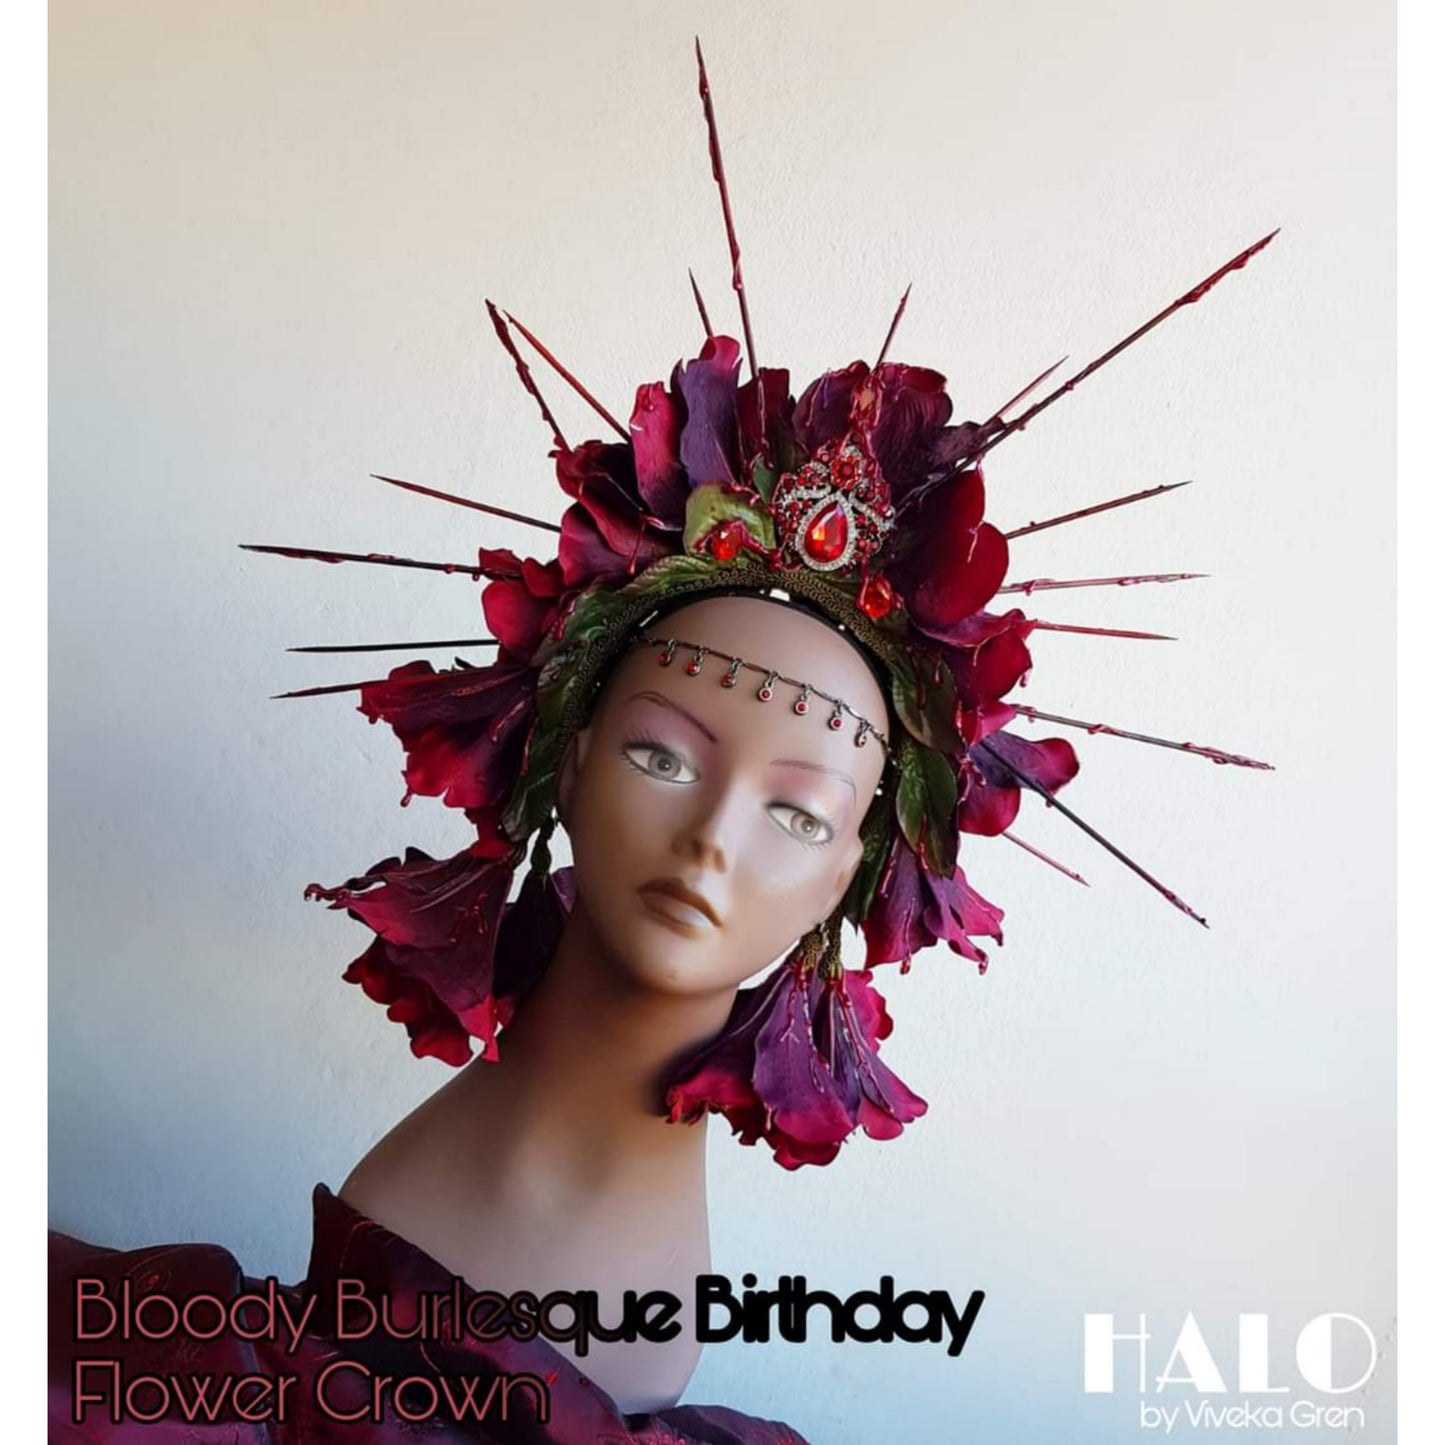 The Bloody Burlesque Birthday Flower Crown